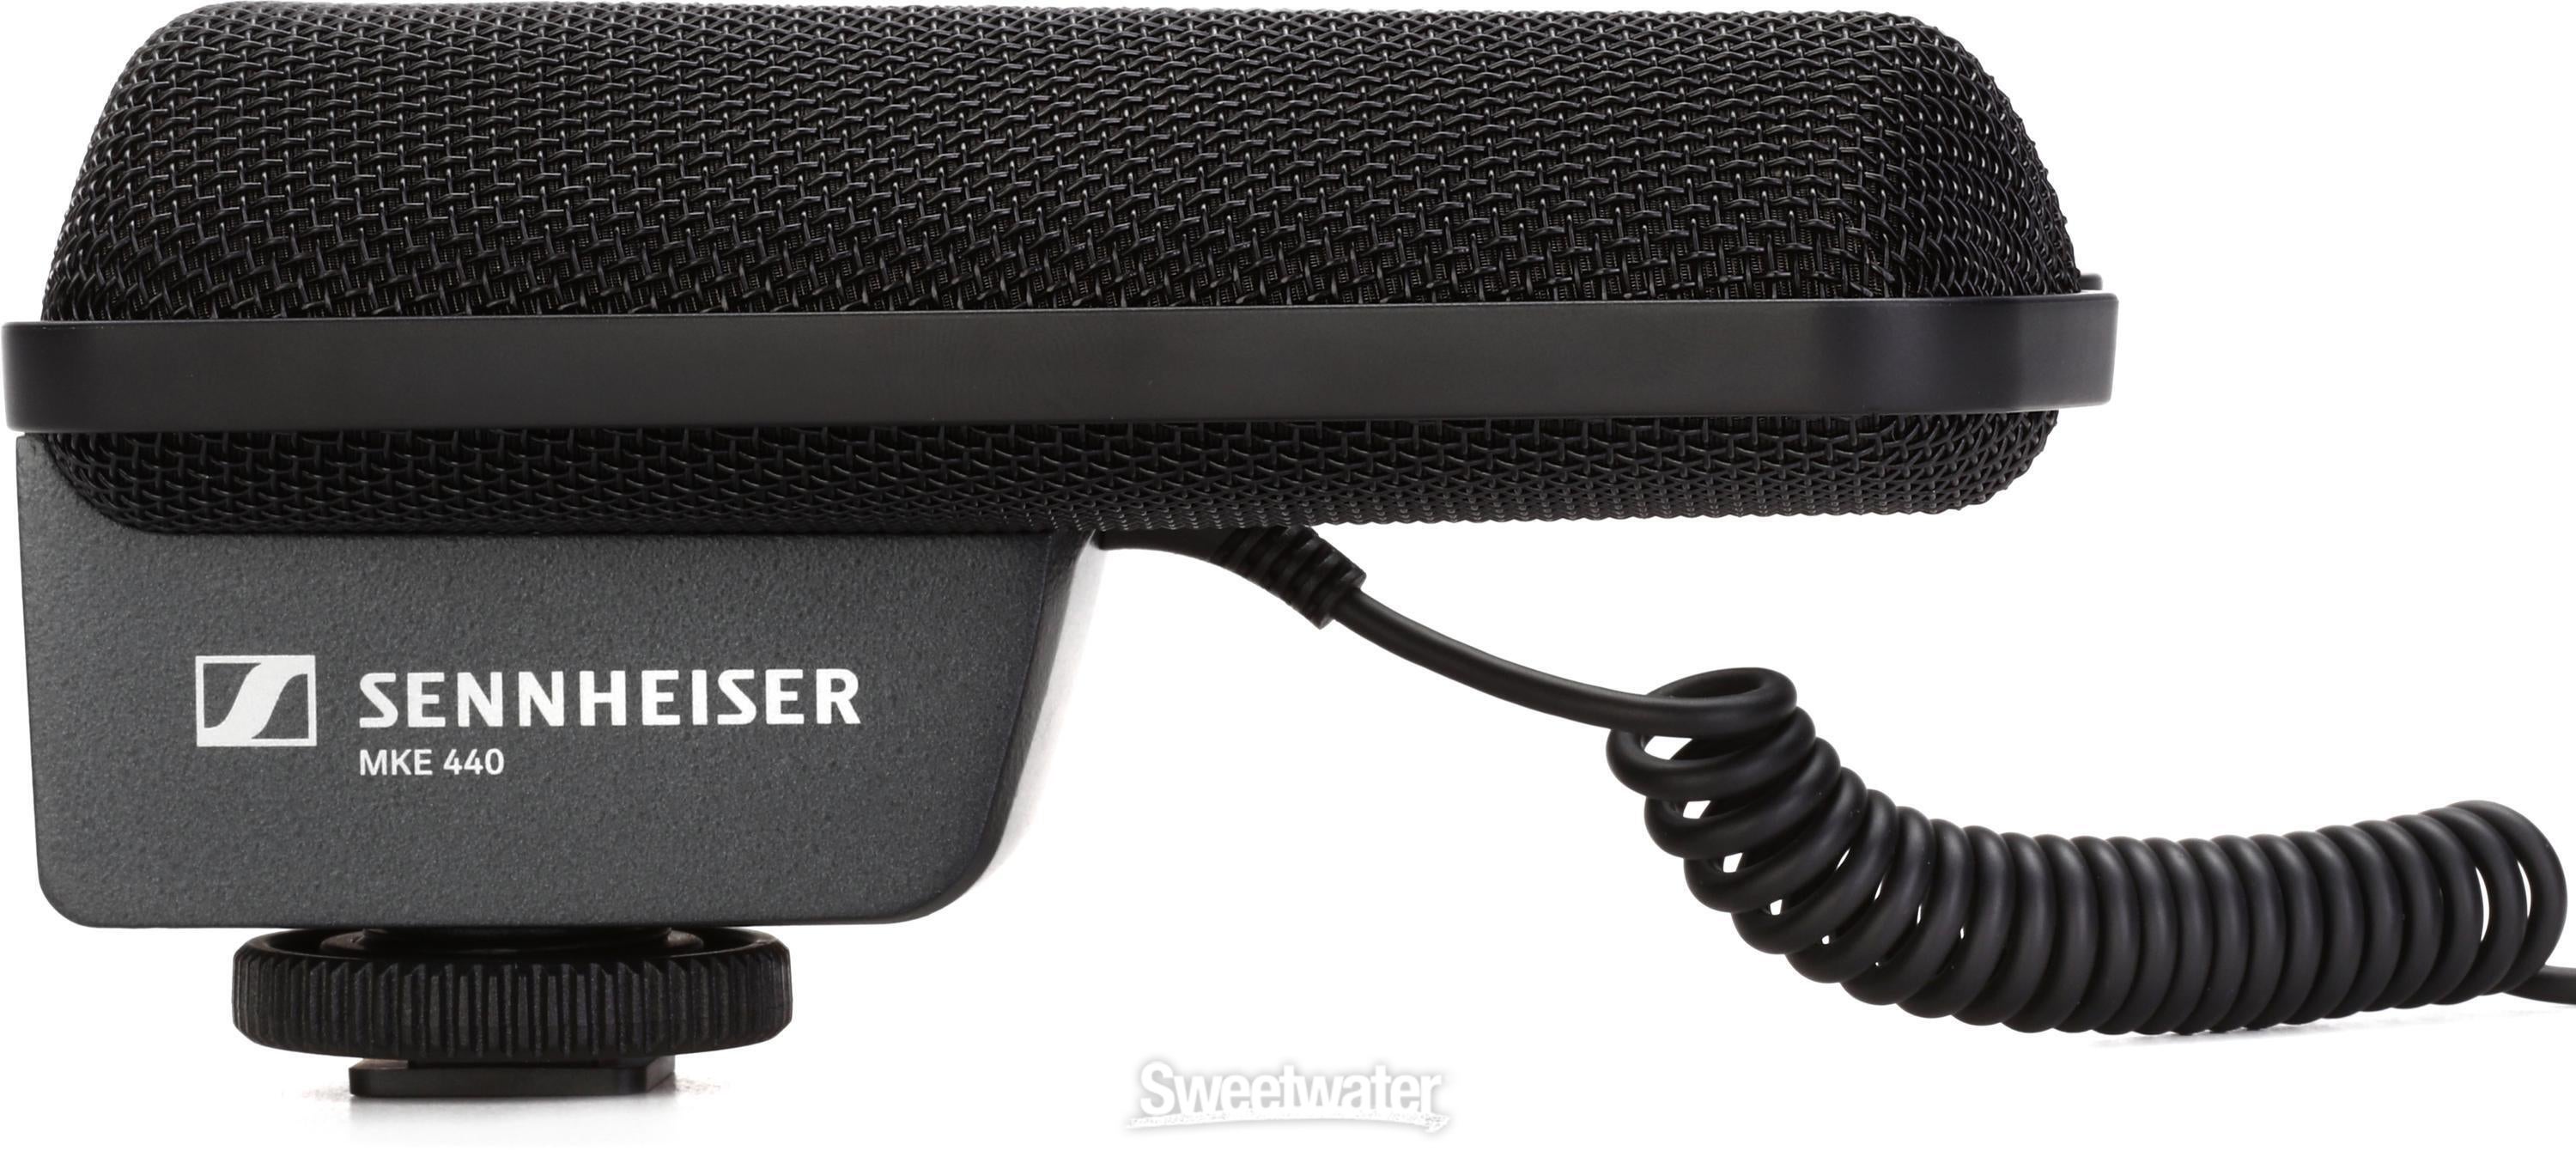 Sennheiser MKE 440 Camera-mount Stereo Shotgun Microphone Reviews